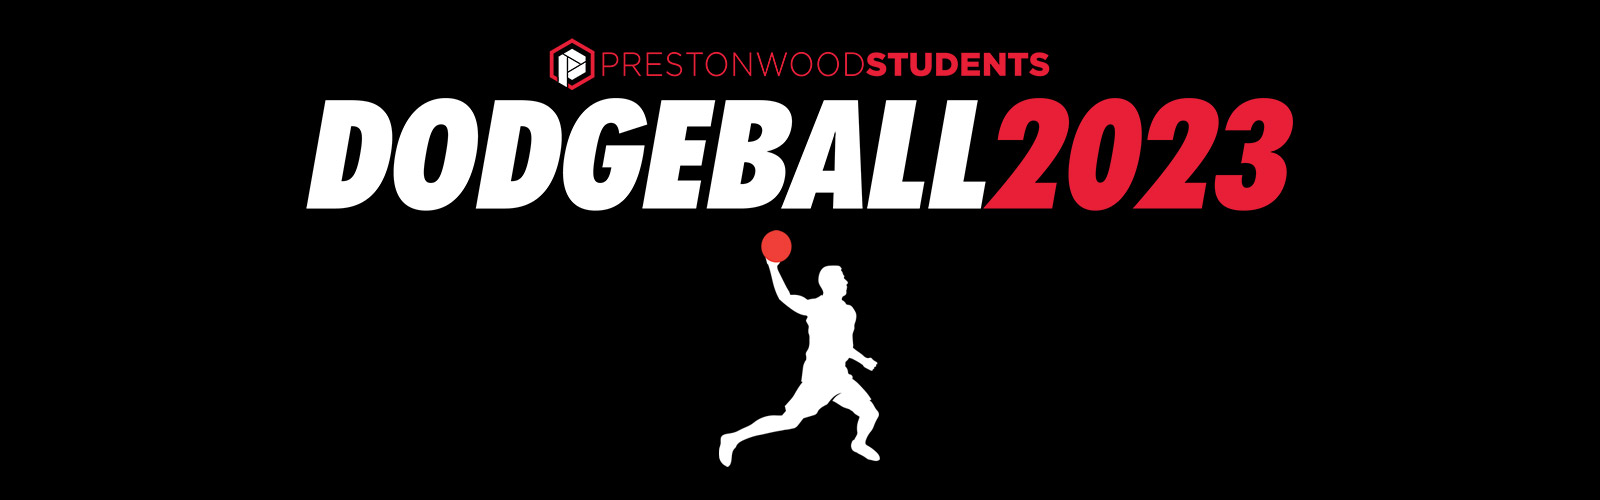 Dodgeball 2023